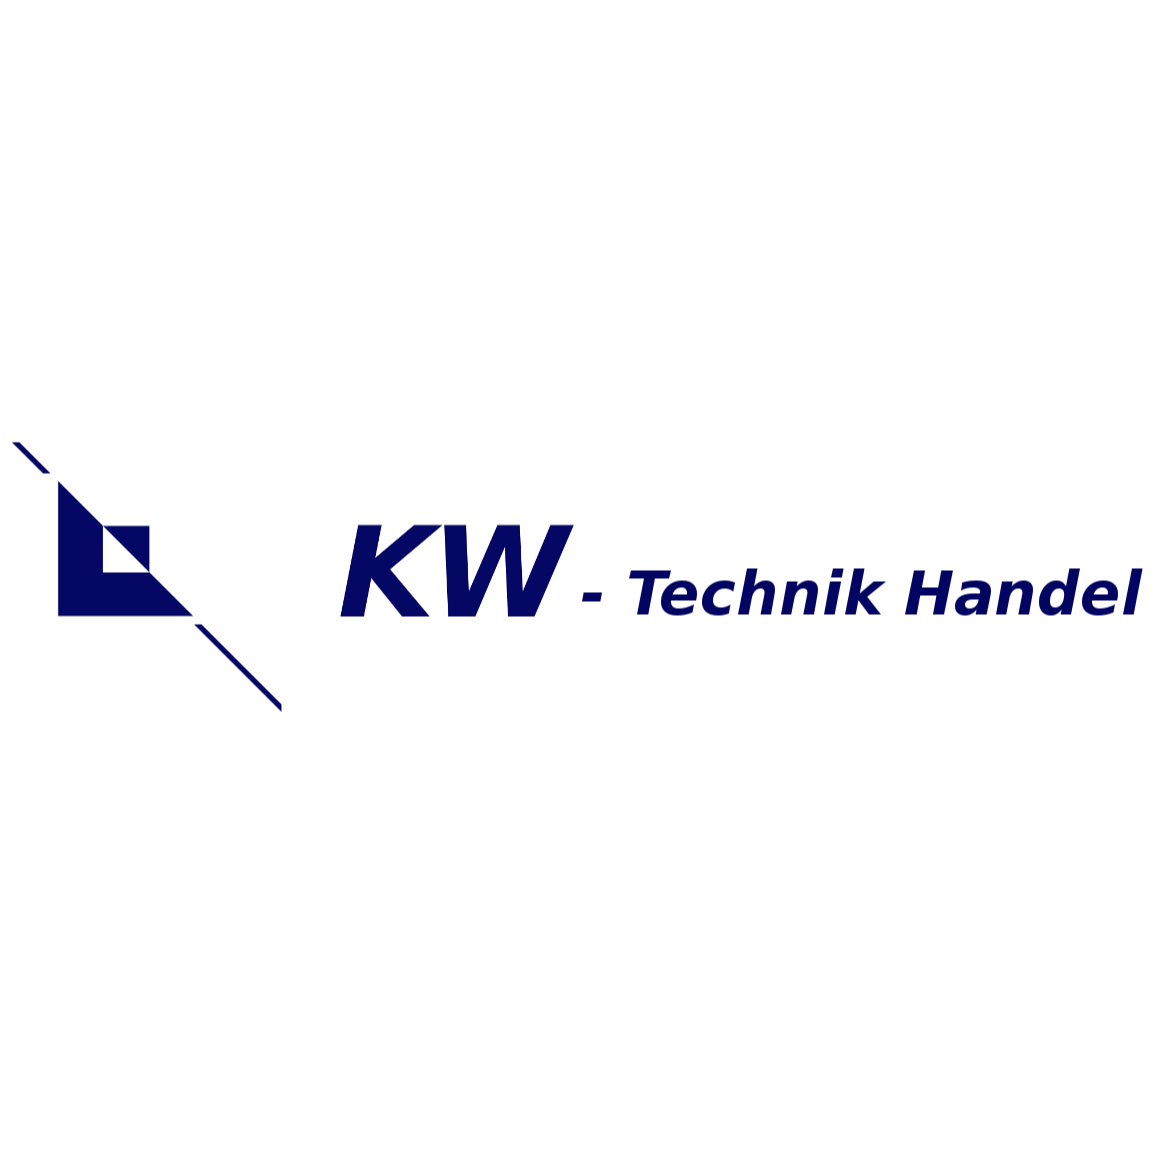 KW Technik Handel, Ventilreparatur, Ersatzteile, Mechanische Fertigung in Altenholz - Logo